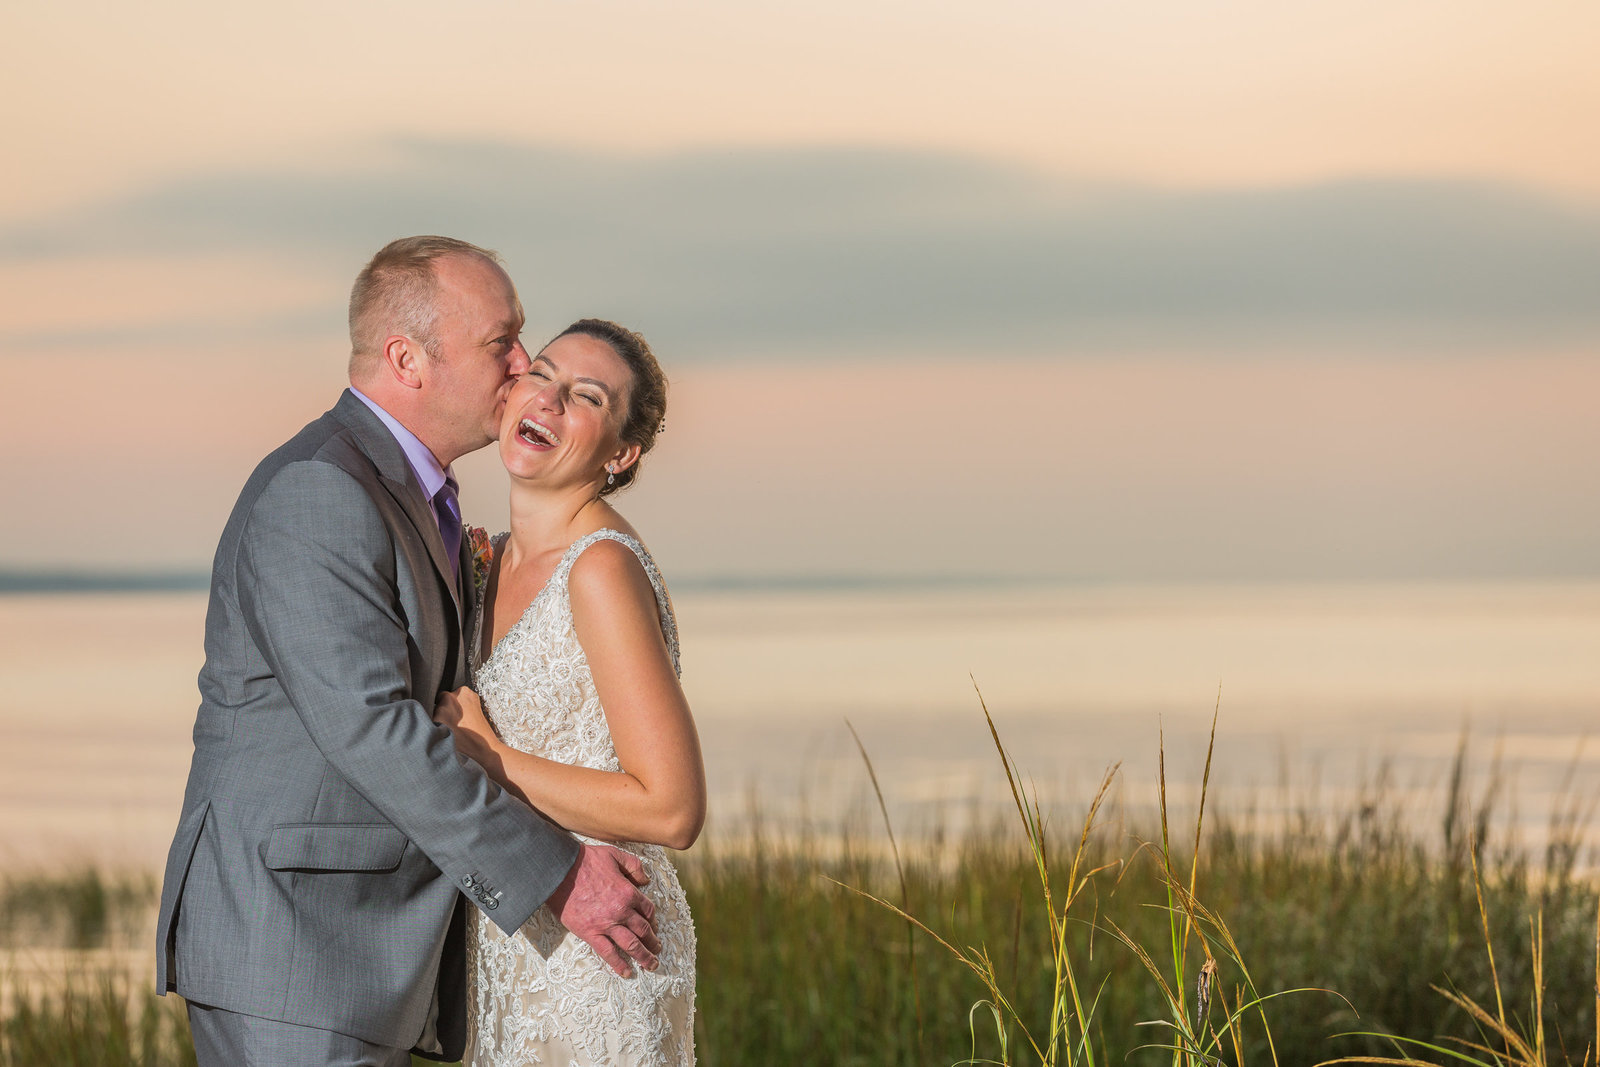 Orleans MA_Cape Cod_Cape Cod Wedding Portraits_Michelle Kaye Photography-13